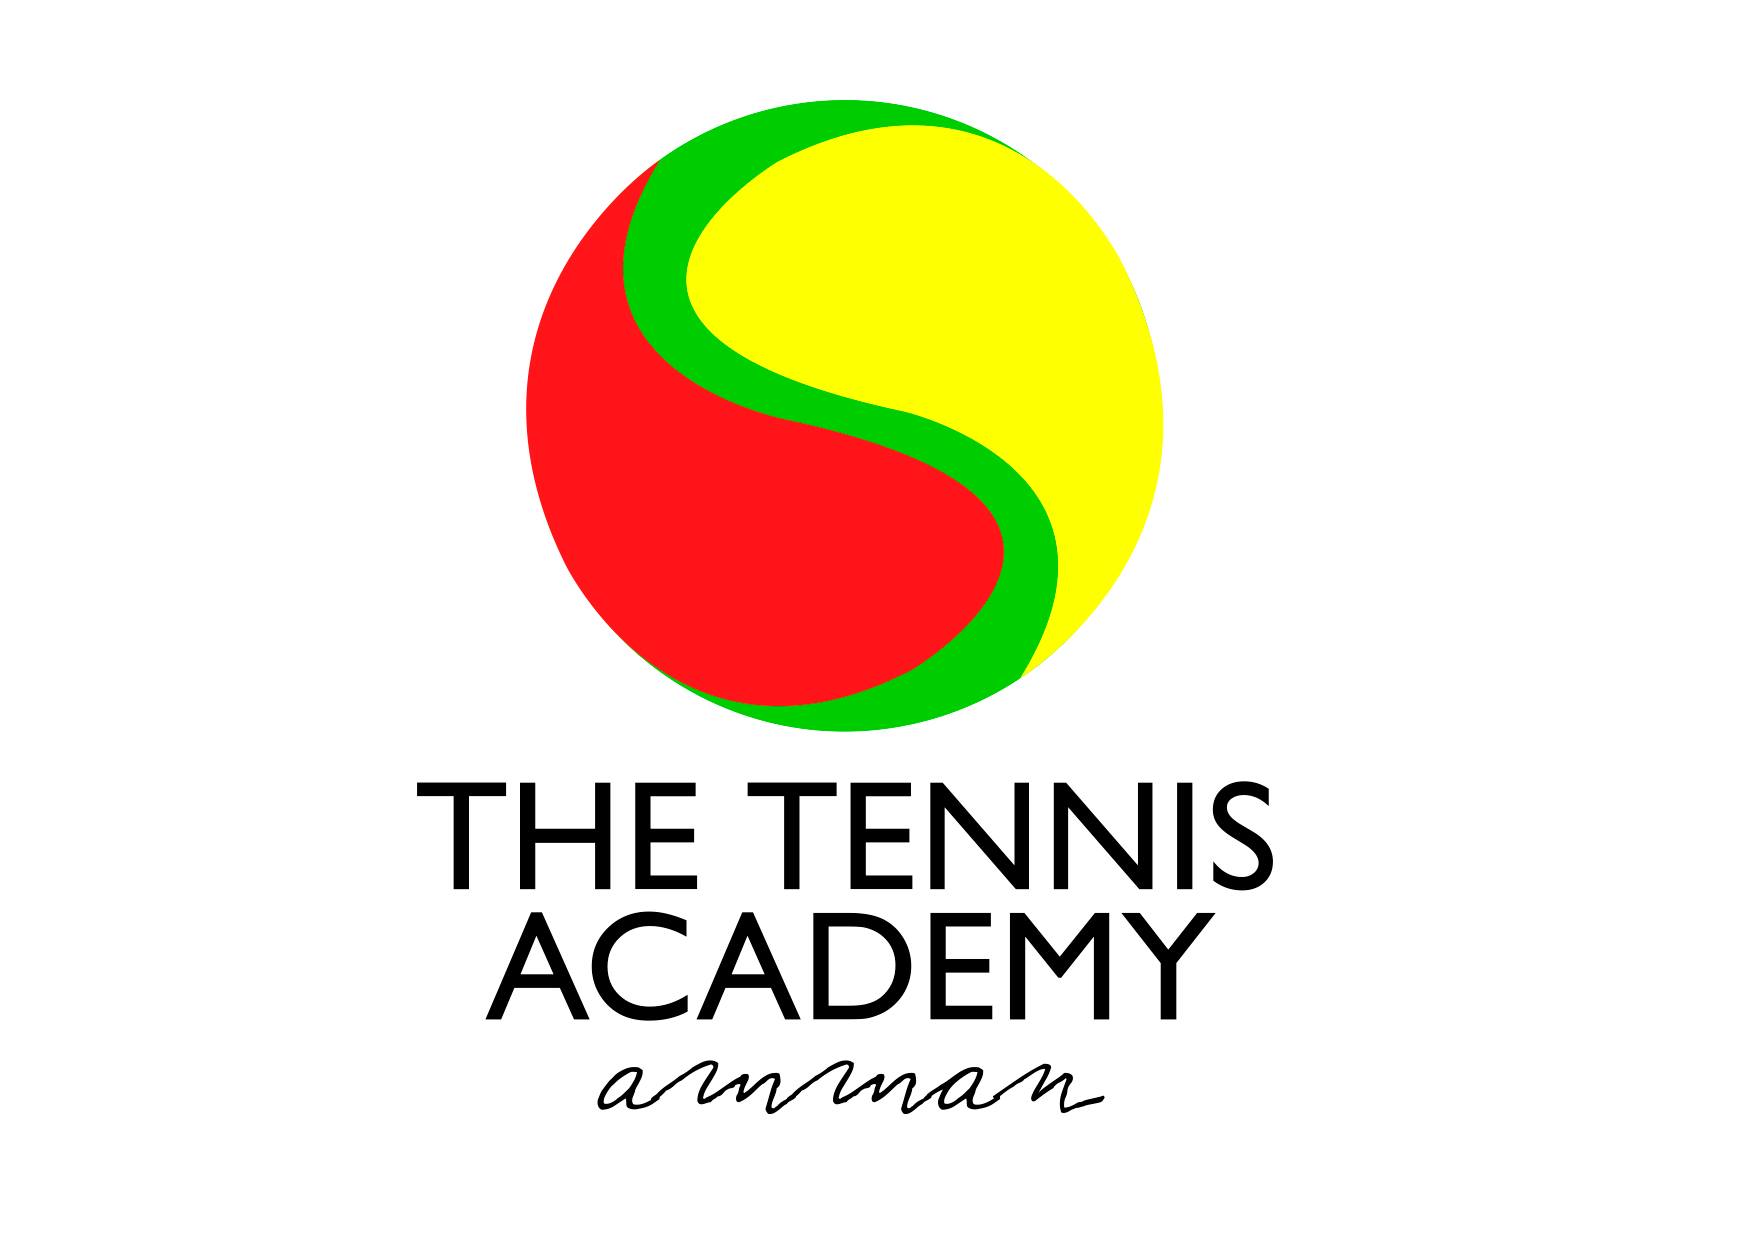 The Tennis Academy